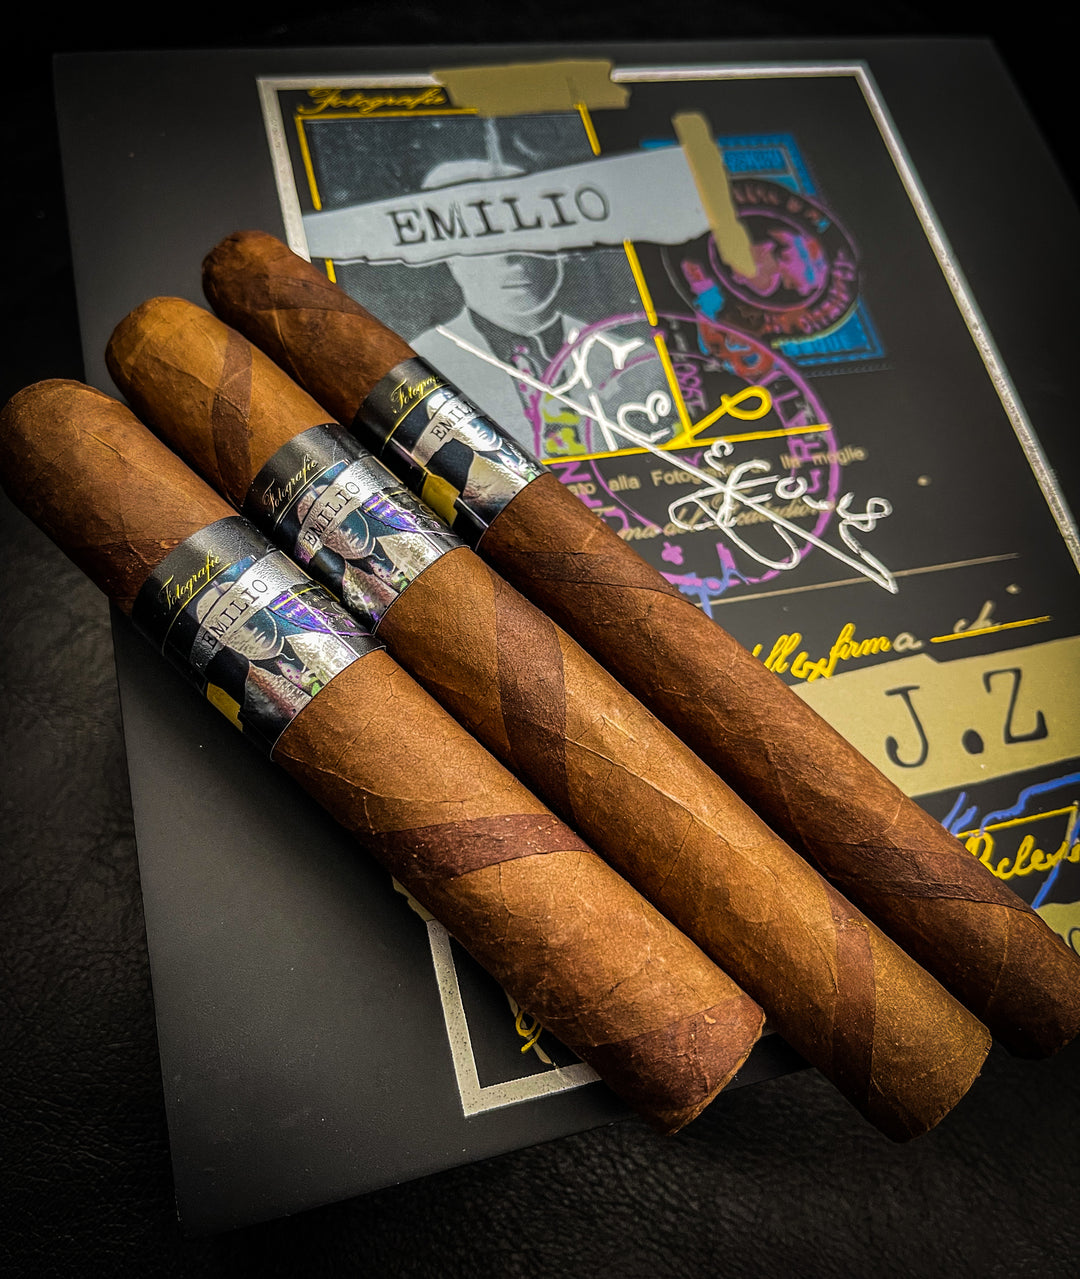 Emilio Cigars Releases Limited Edition LJZ